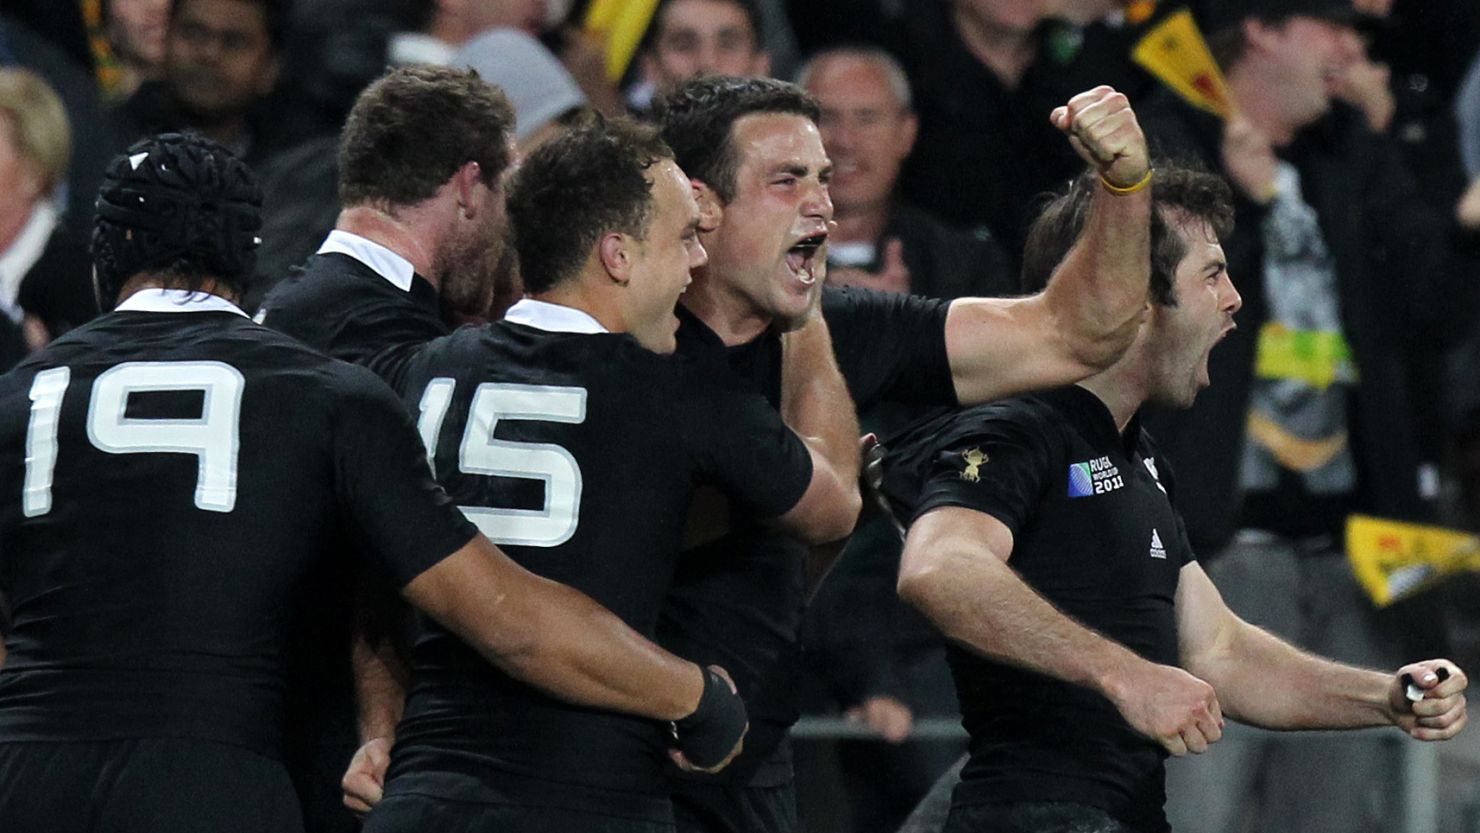 The New Zealand All Blacks celebrate their 20-6 semifinal win over Australia.